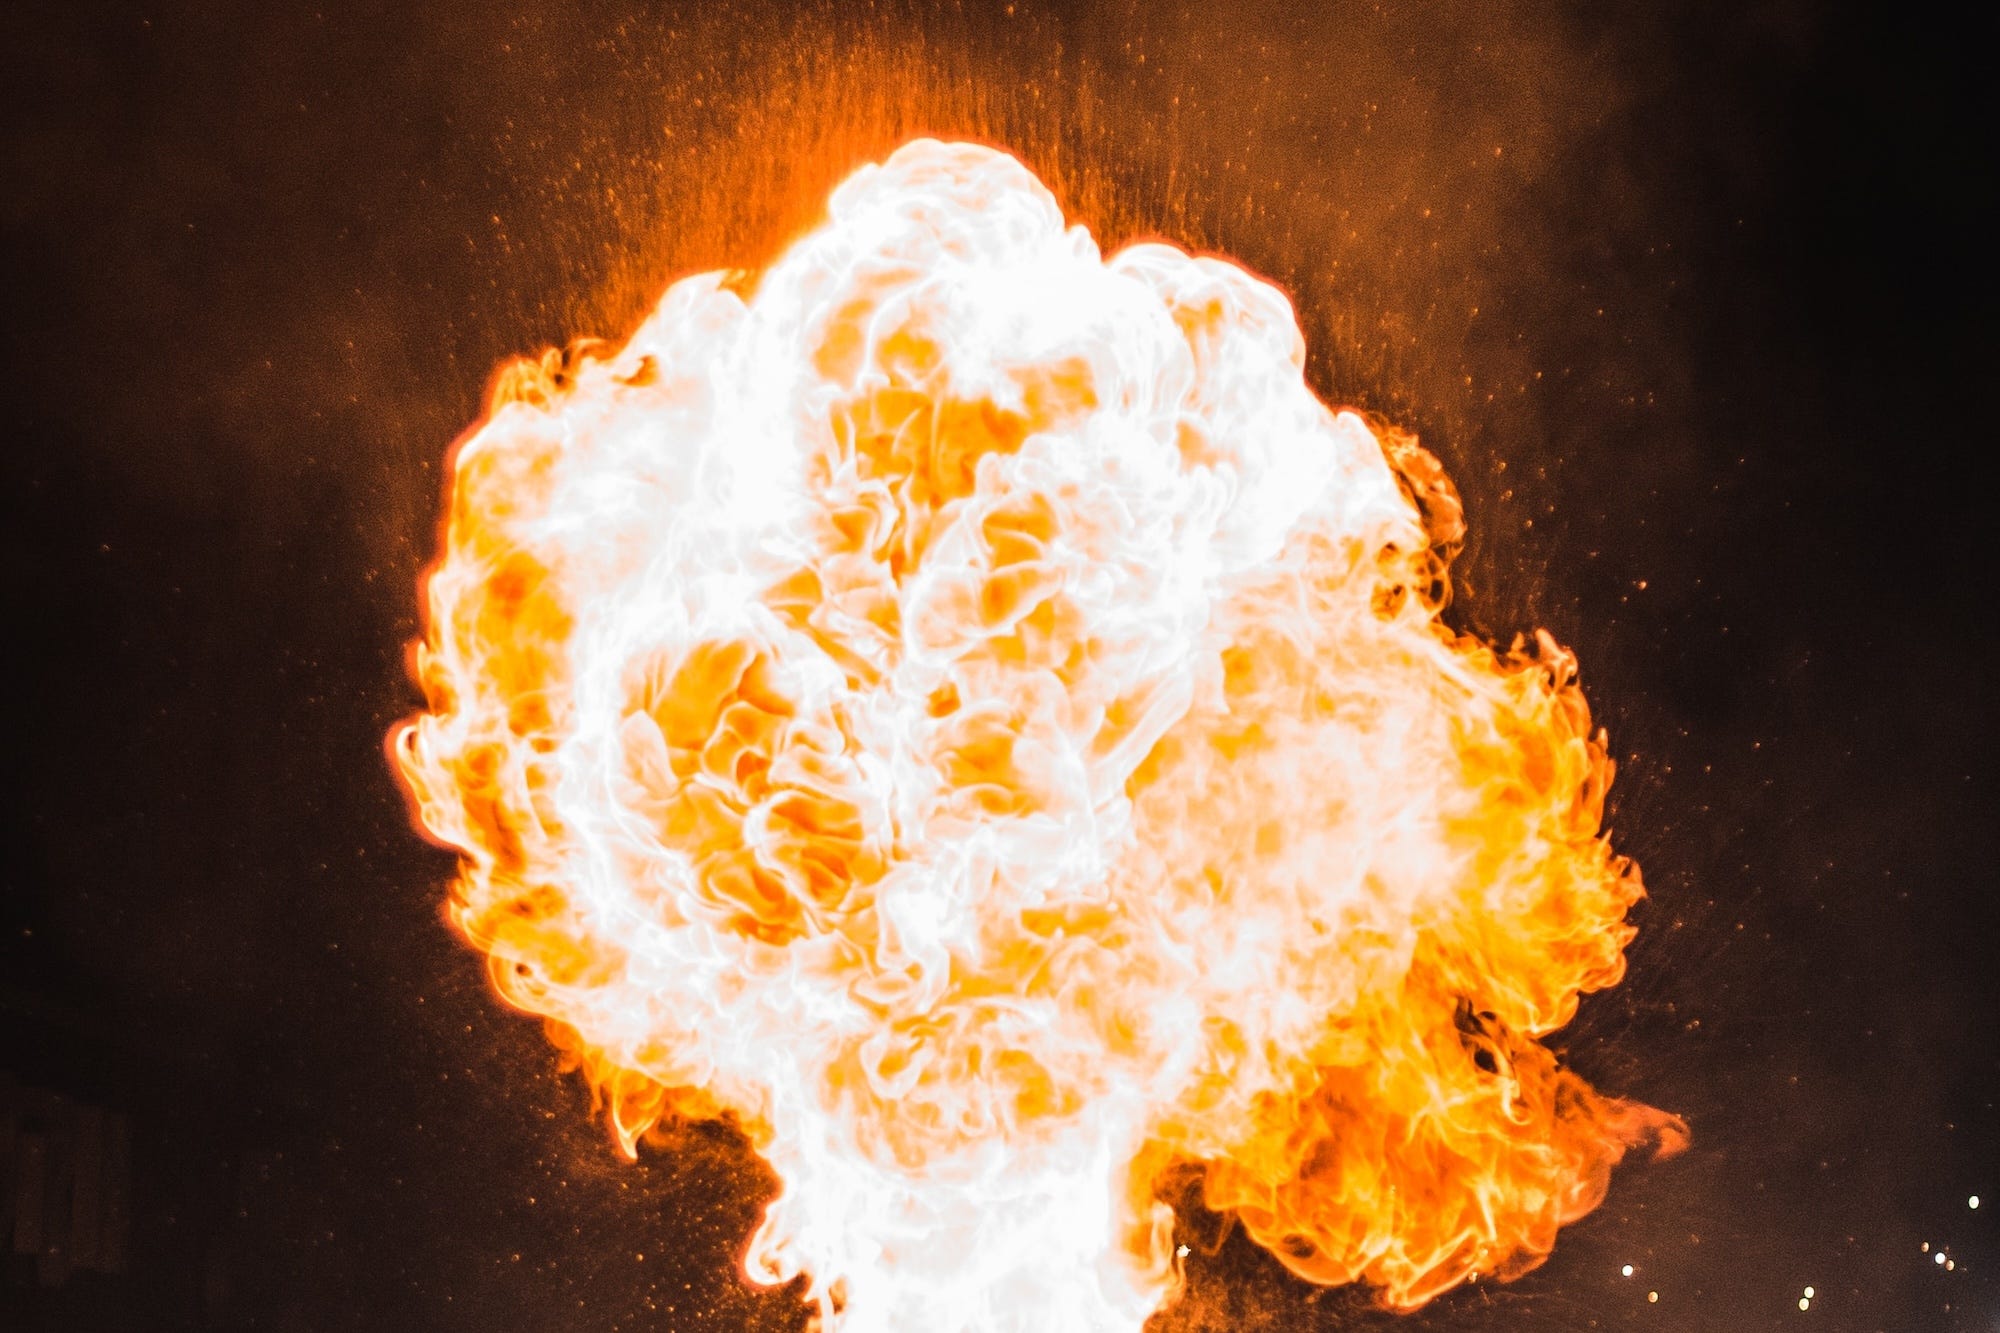 photo of a fireball